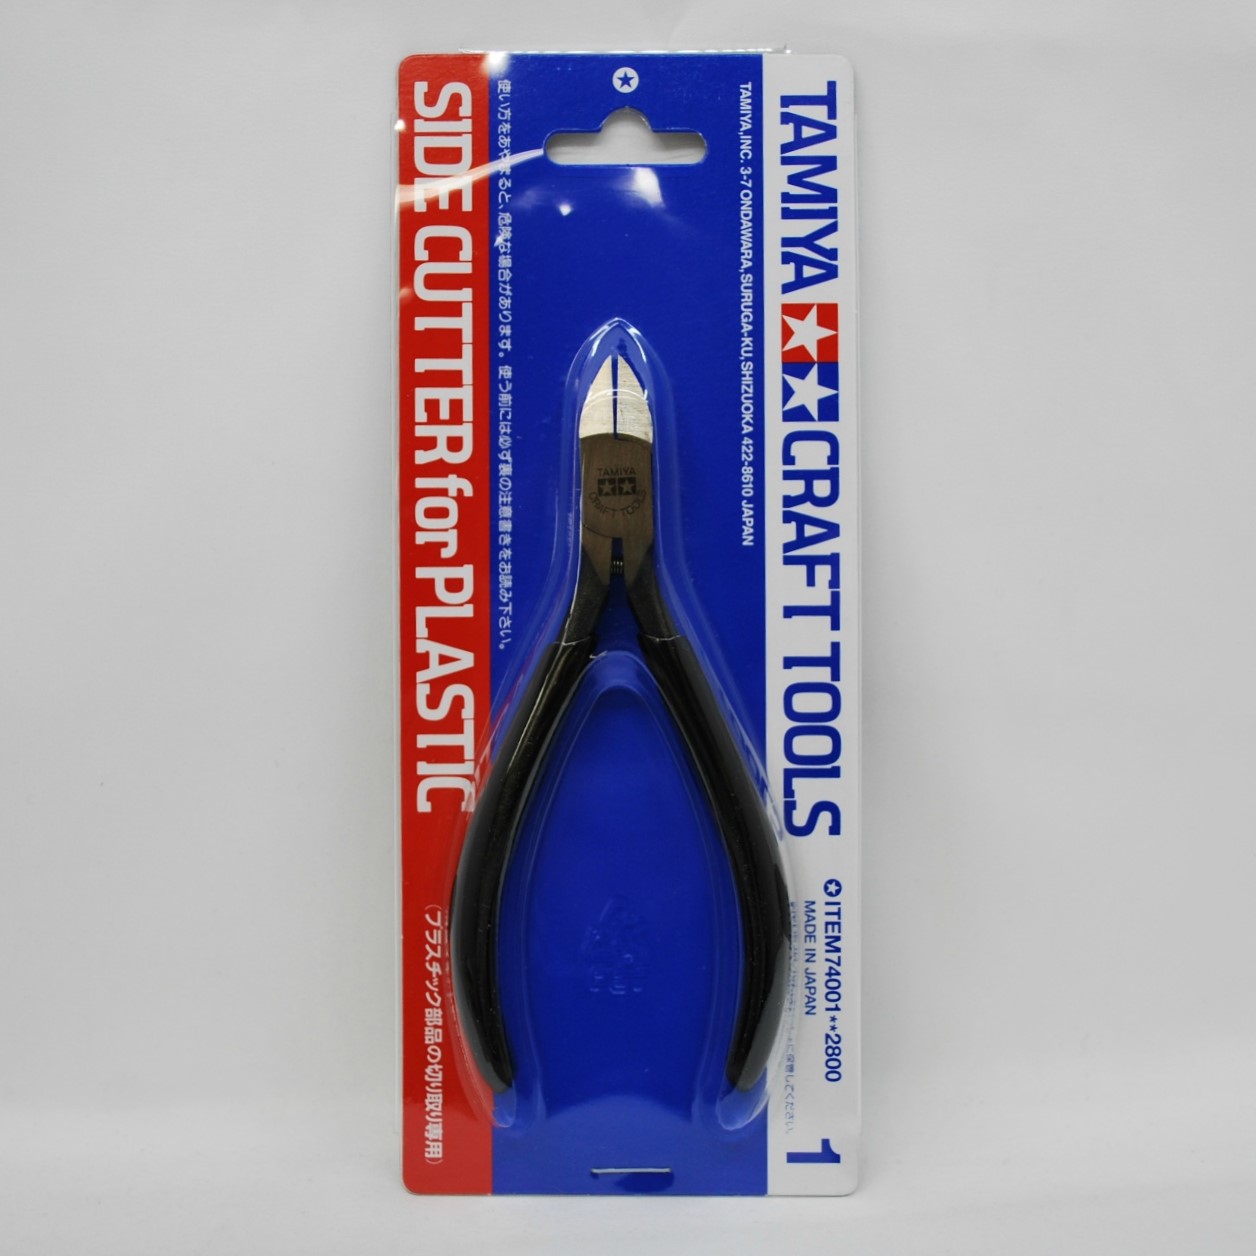 TAMIYA Side Cutter for Plastic #74001